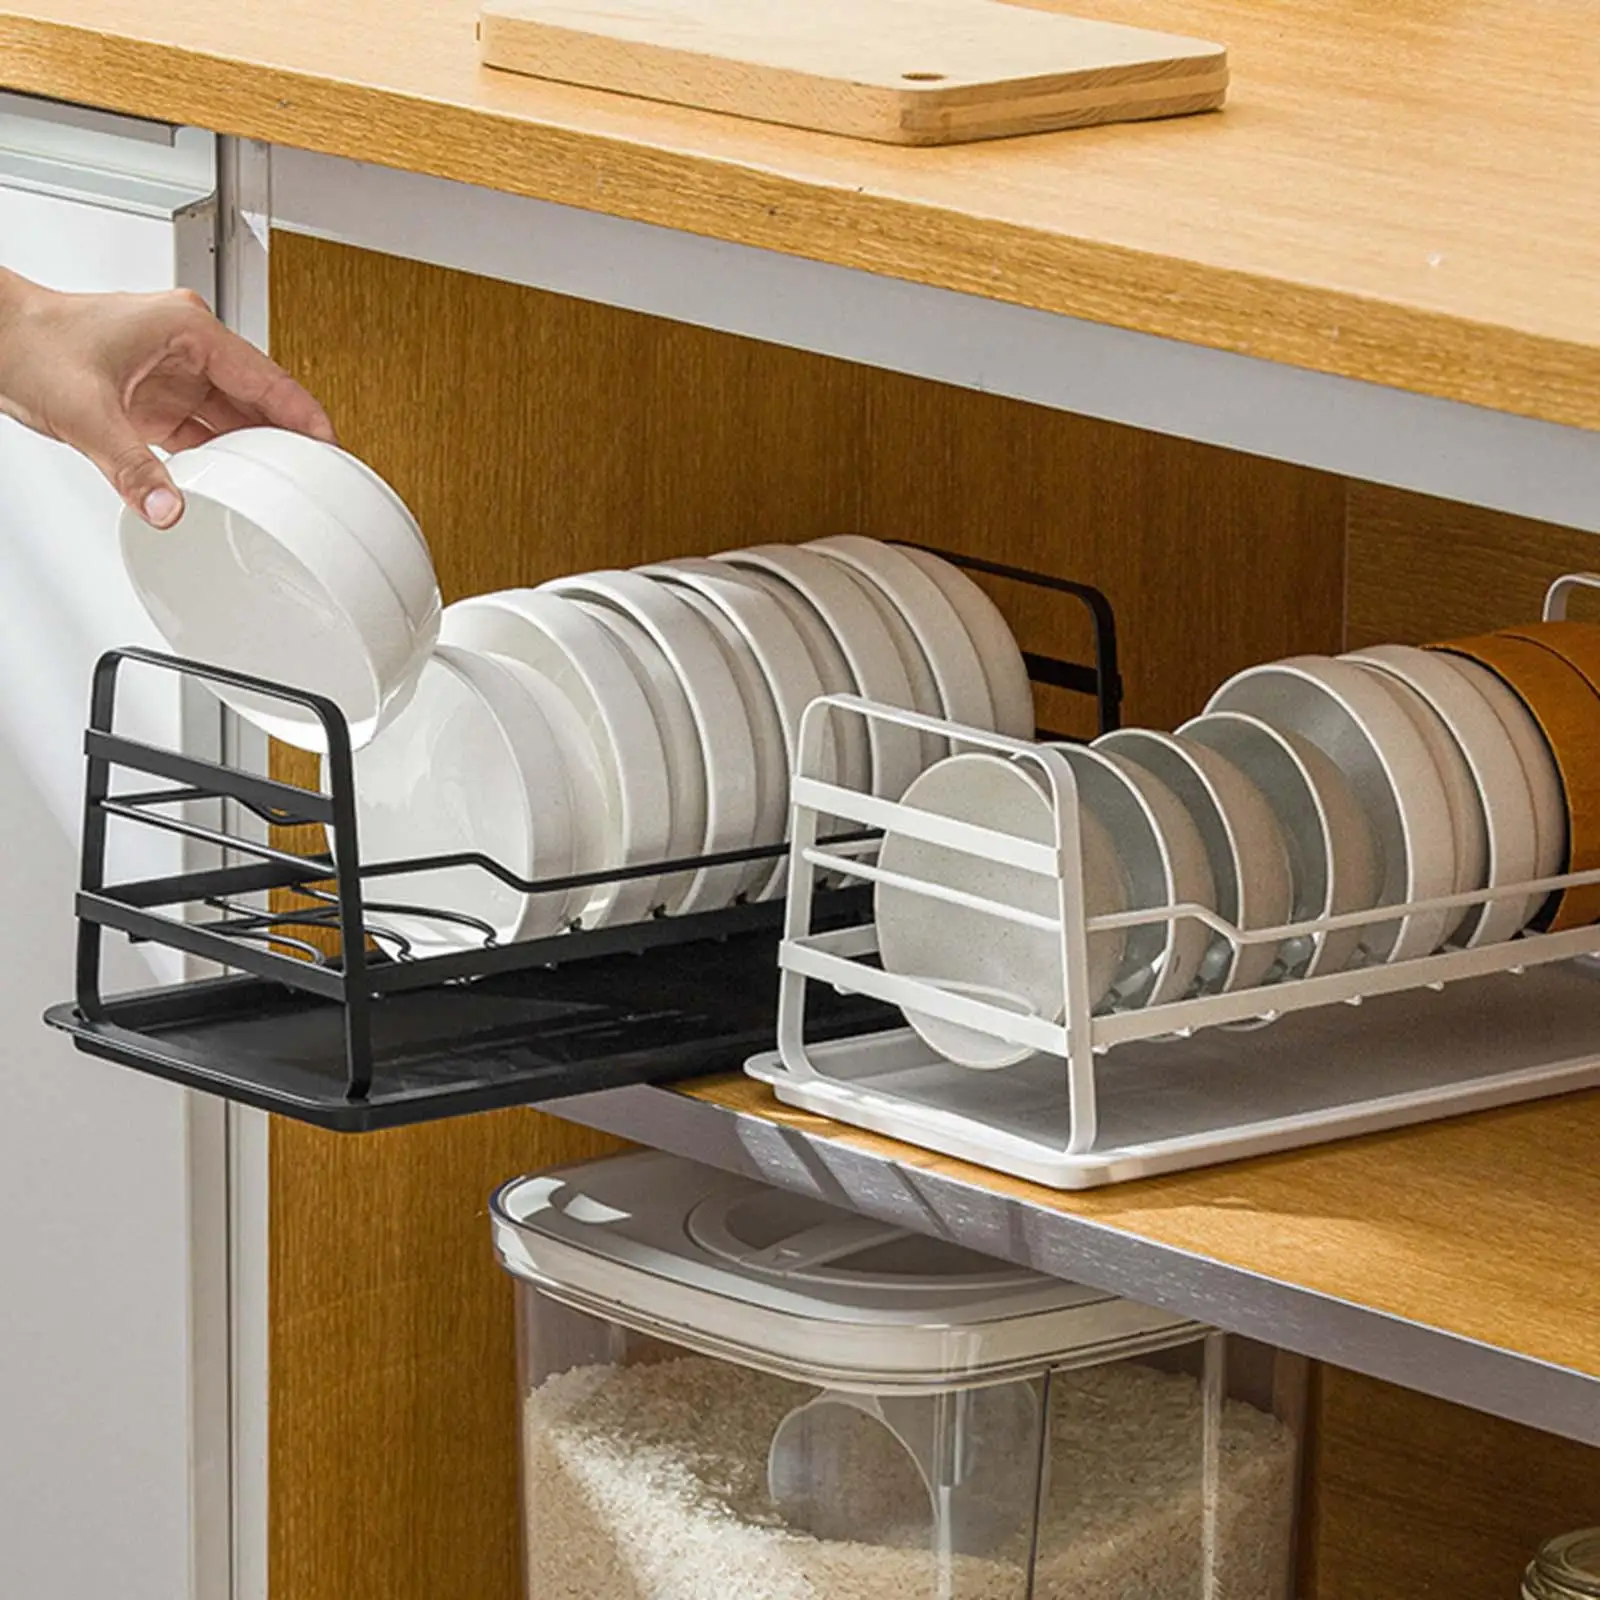 Iron Dish Drying Rack Organizer Cutlery Utensil Holder with Drip Tray Kitchen Countertop Dish Drainer Dishes Draining Holder